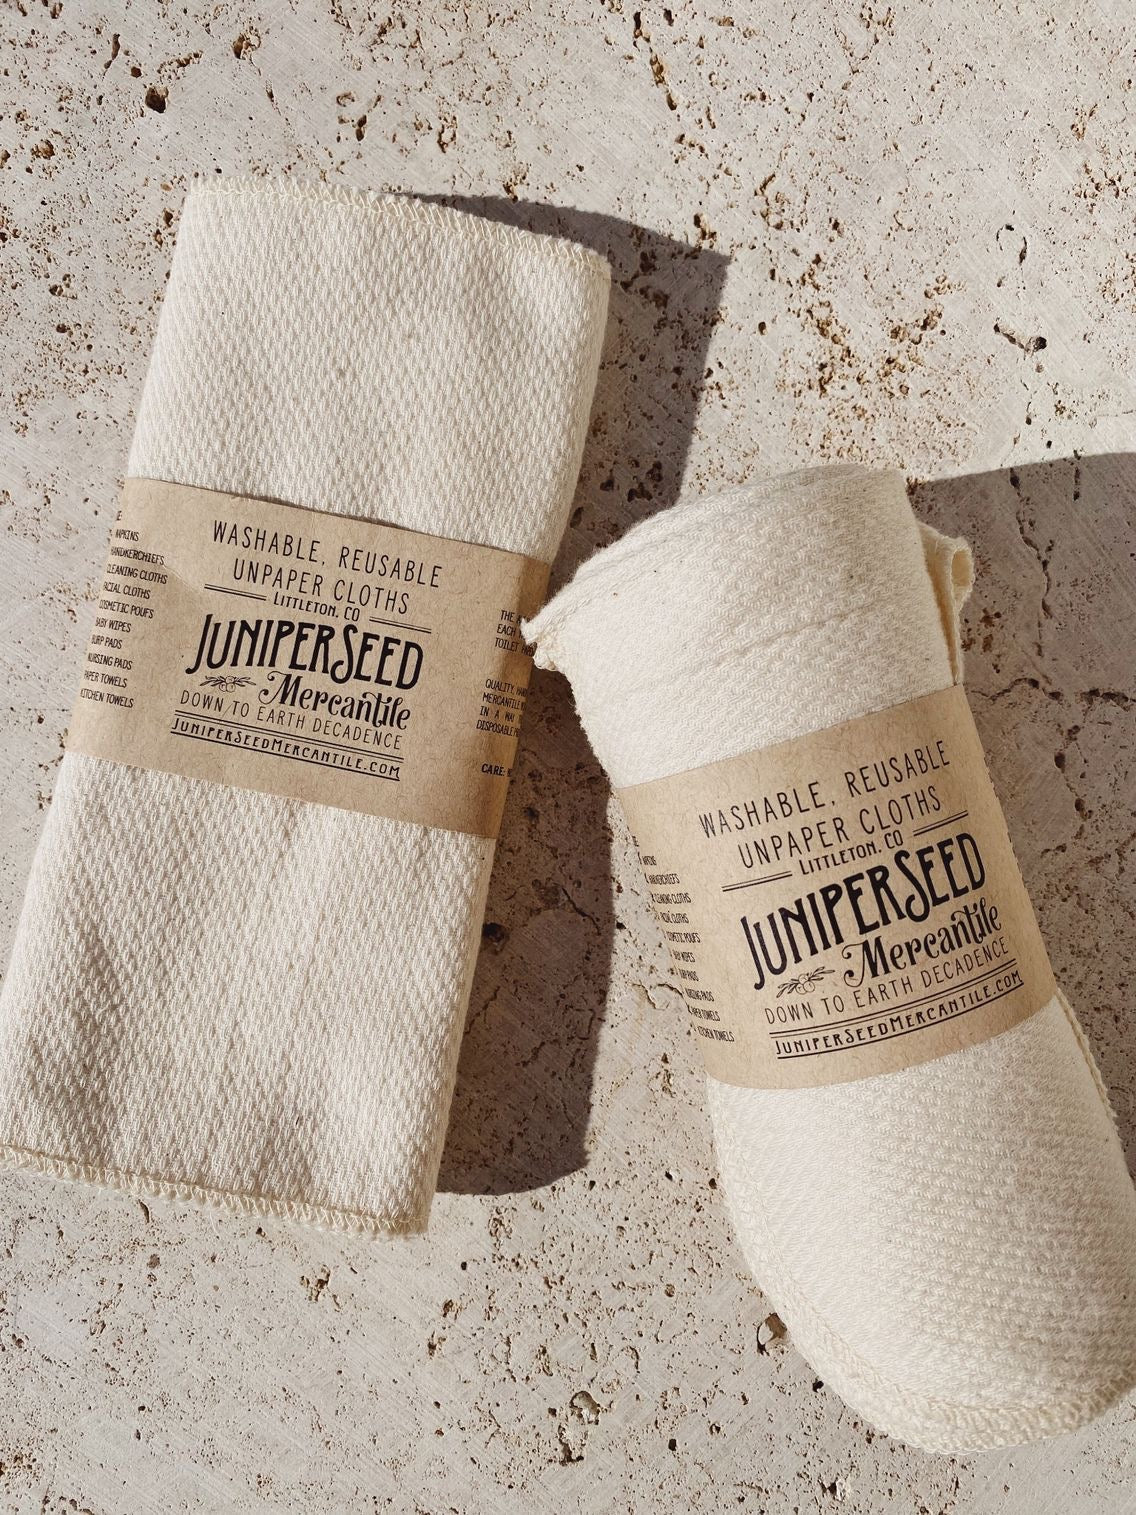 organic cotton unpaper towels